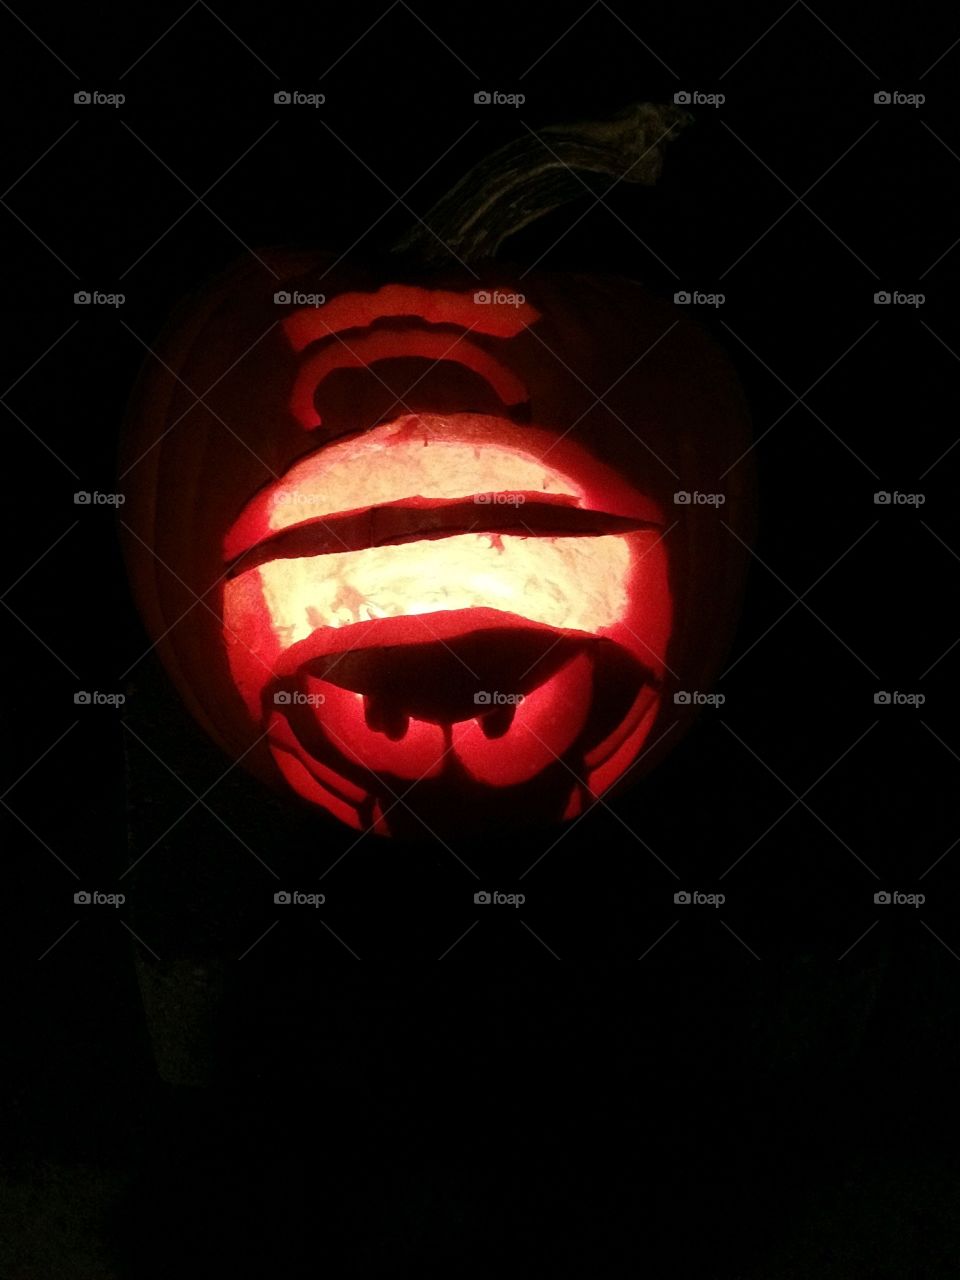 Marvin the pumpkin